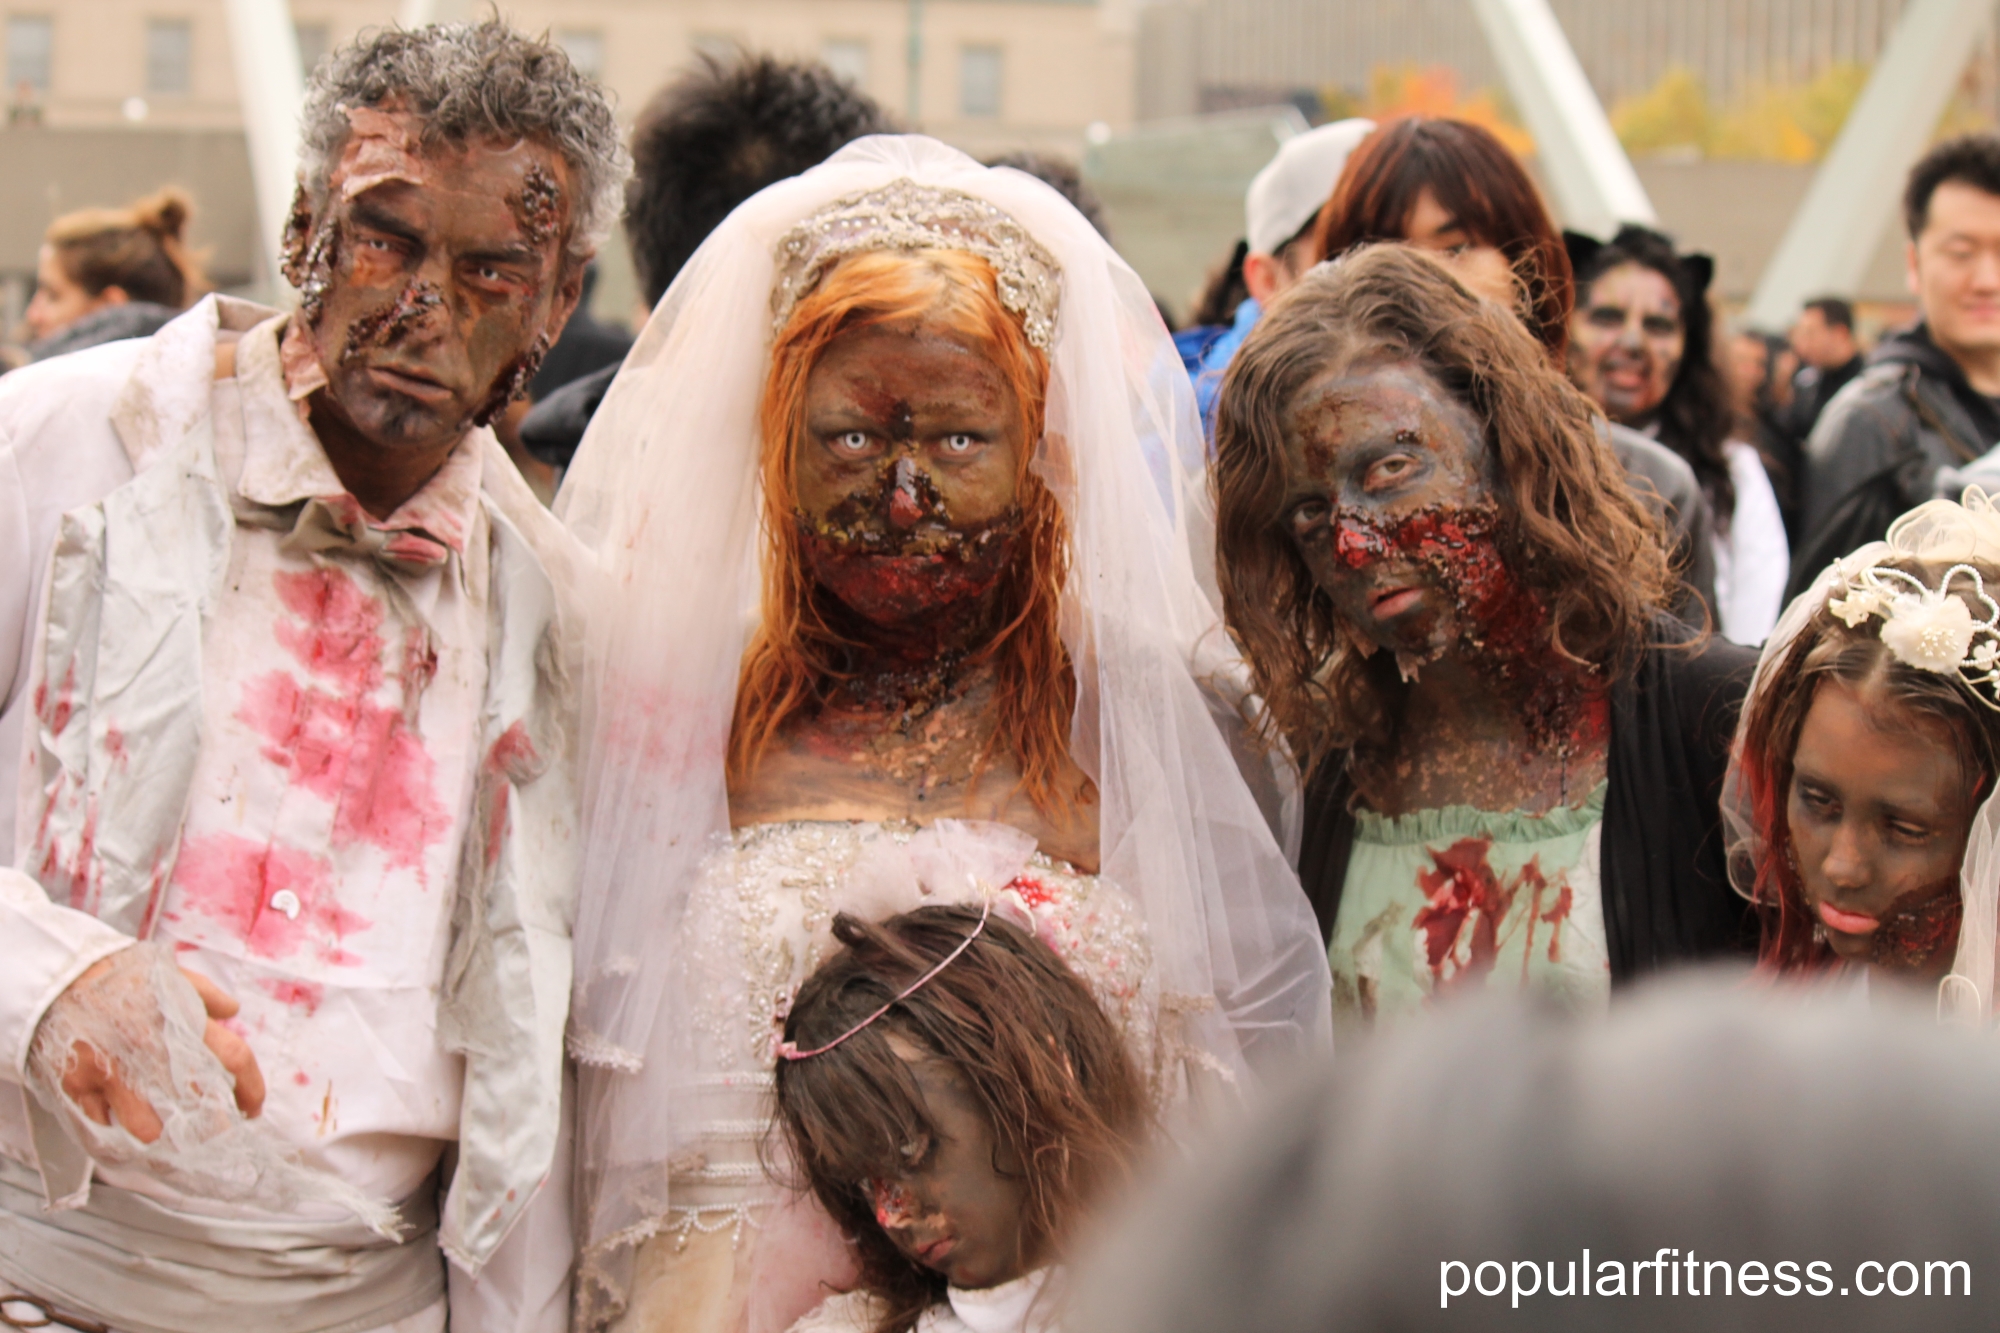 Zombie family wedding - Nice time for a Zombie wedding